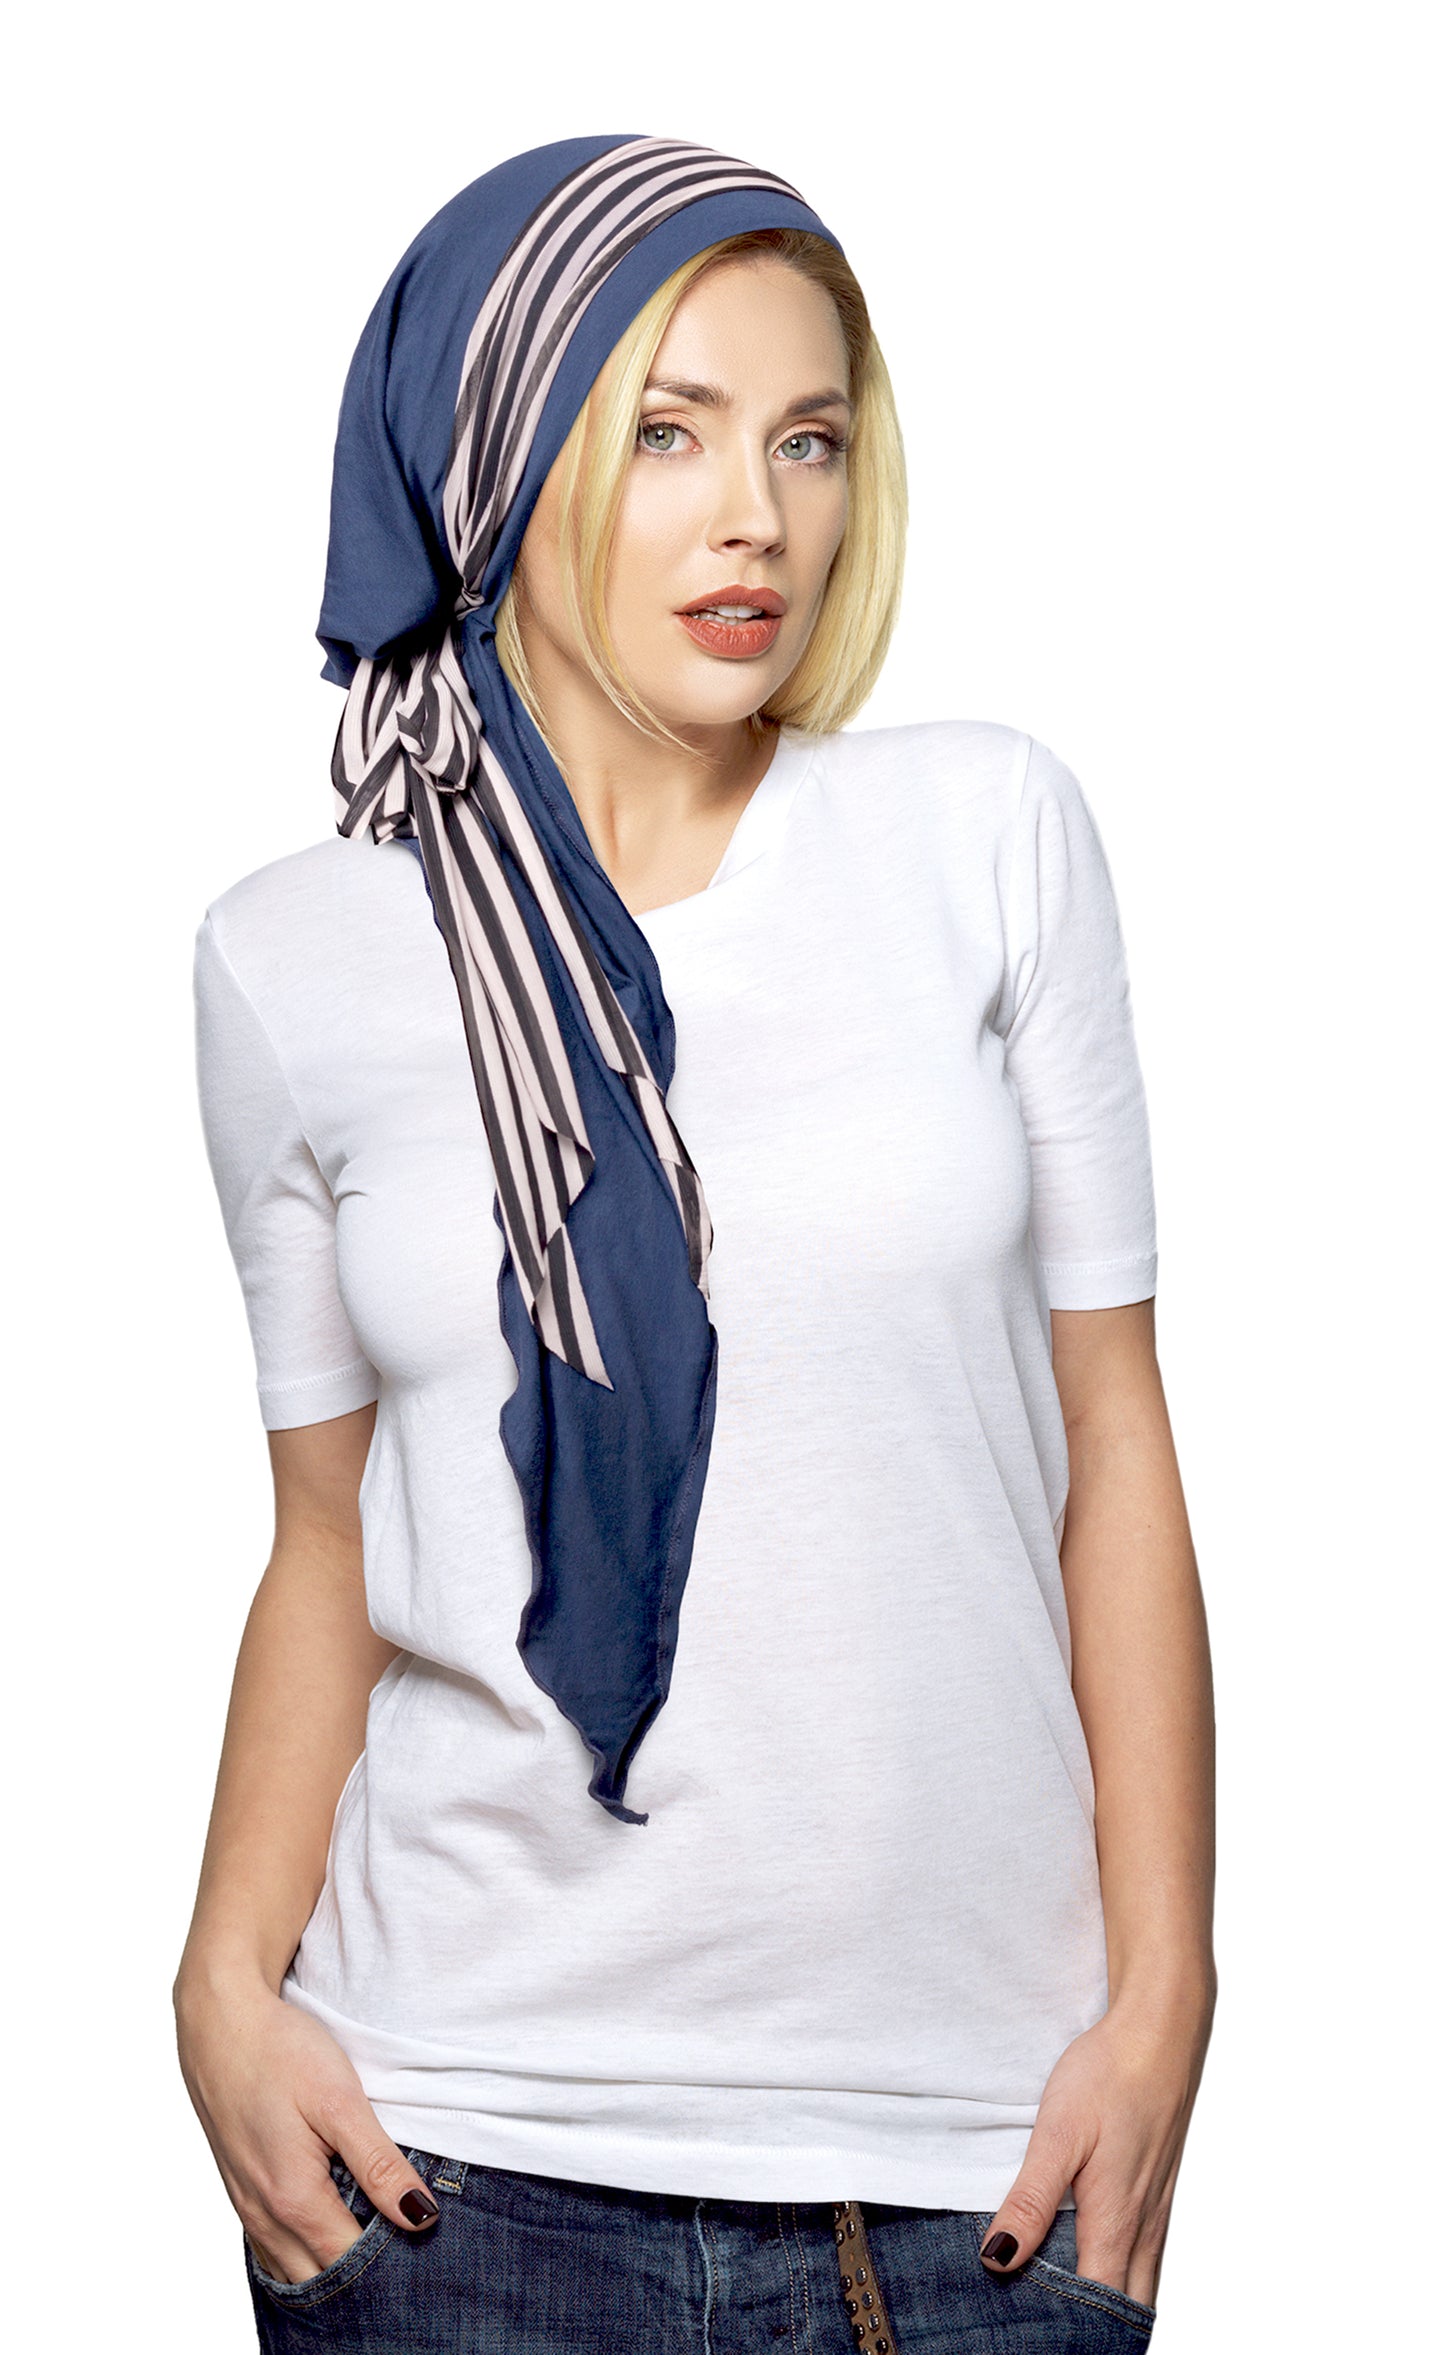 Long navy blue headscarf with stripe wrap